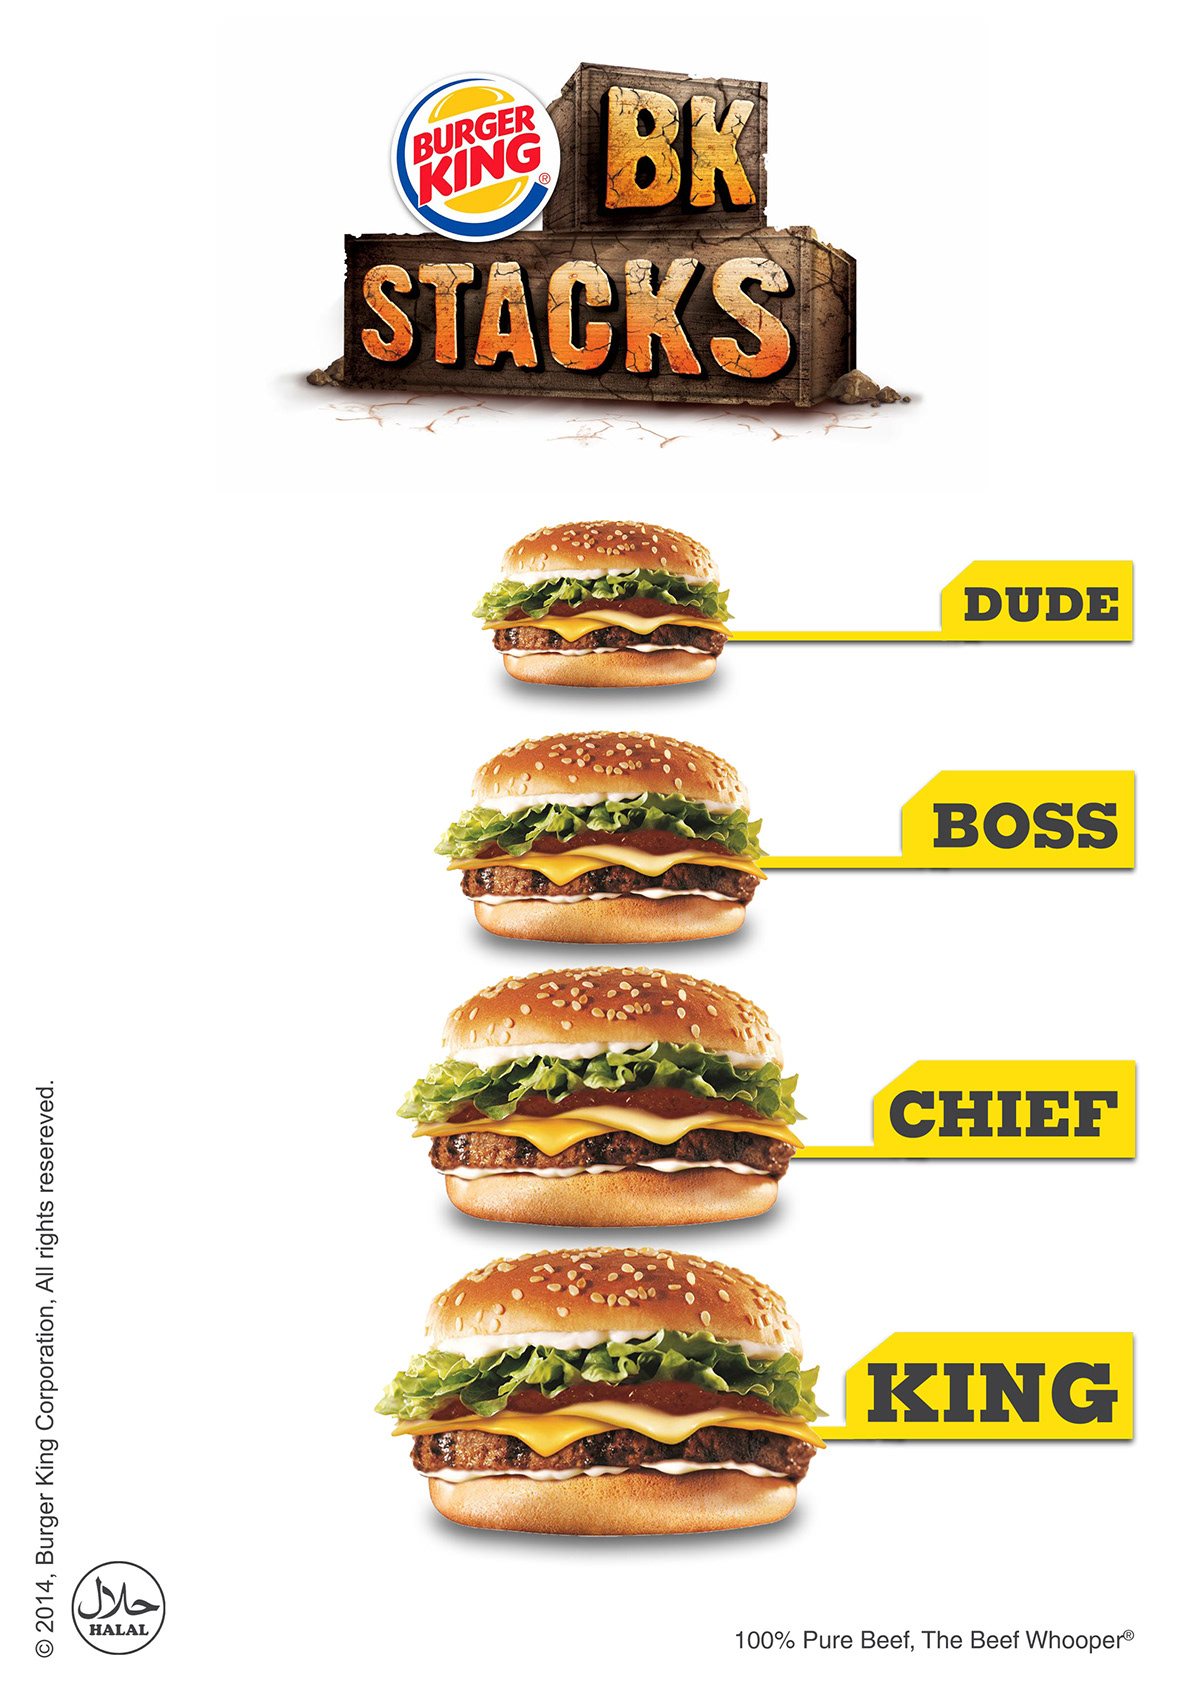 Burger King burger fishncrisp angus beef